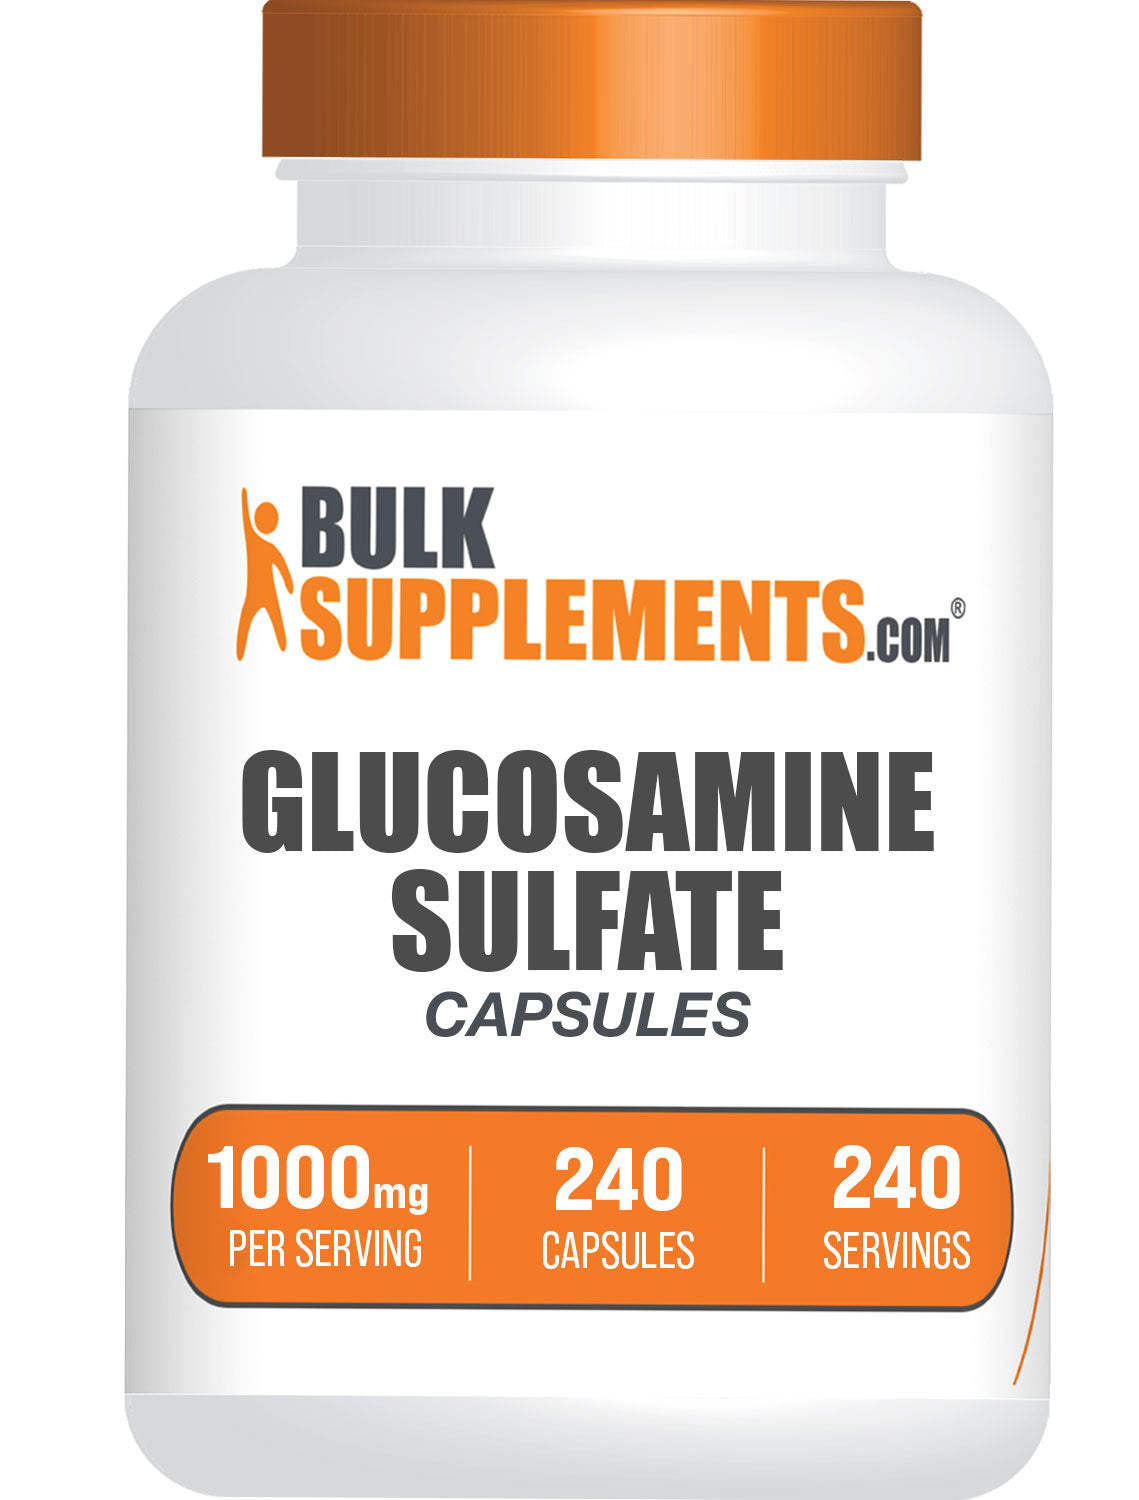 BulkSupplements.com Glucosamine Sulfate Capsules 240 ct bottle image